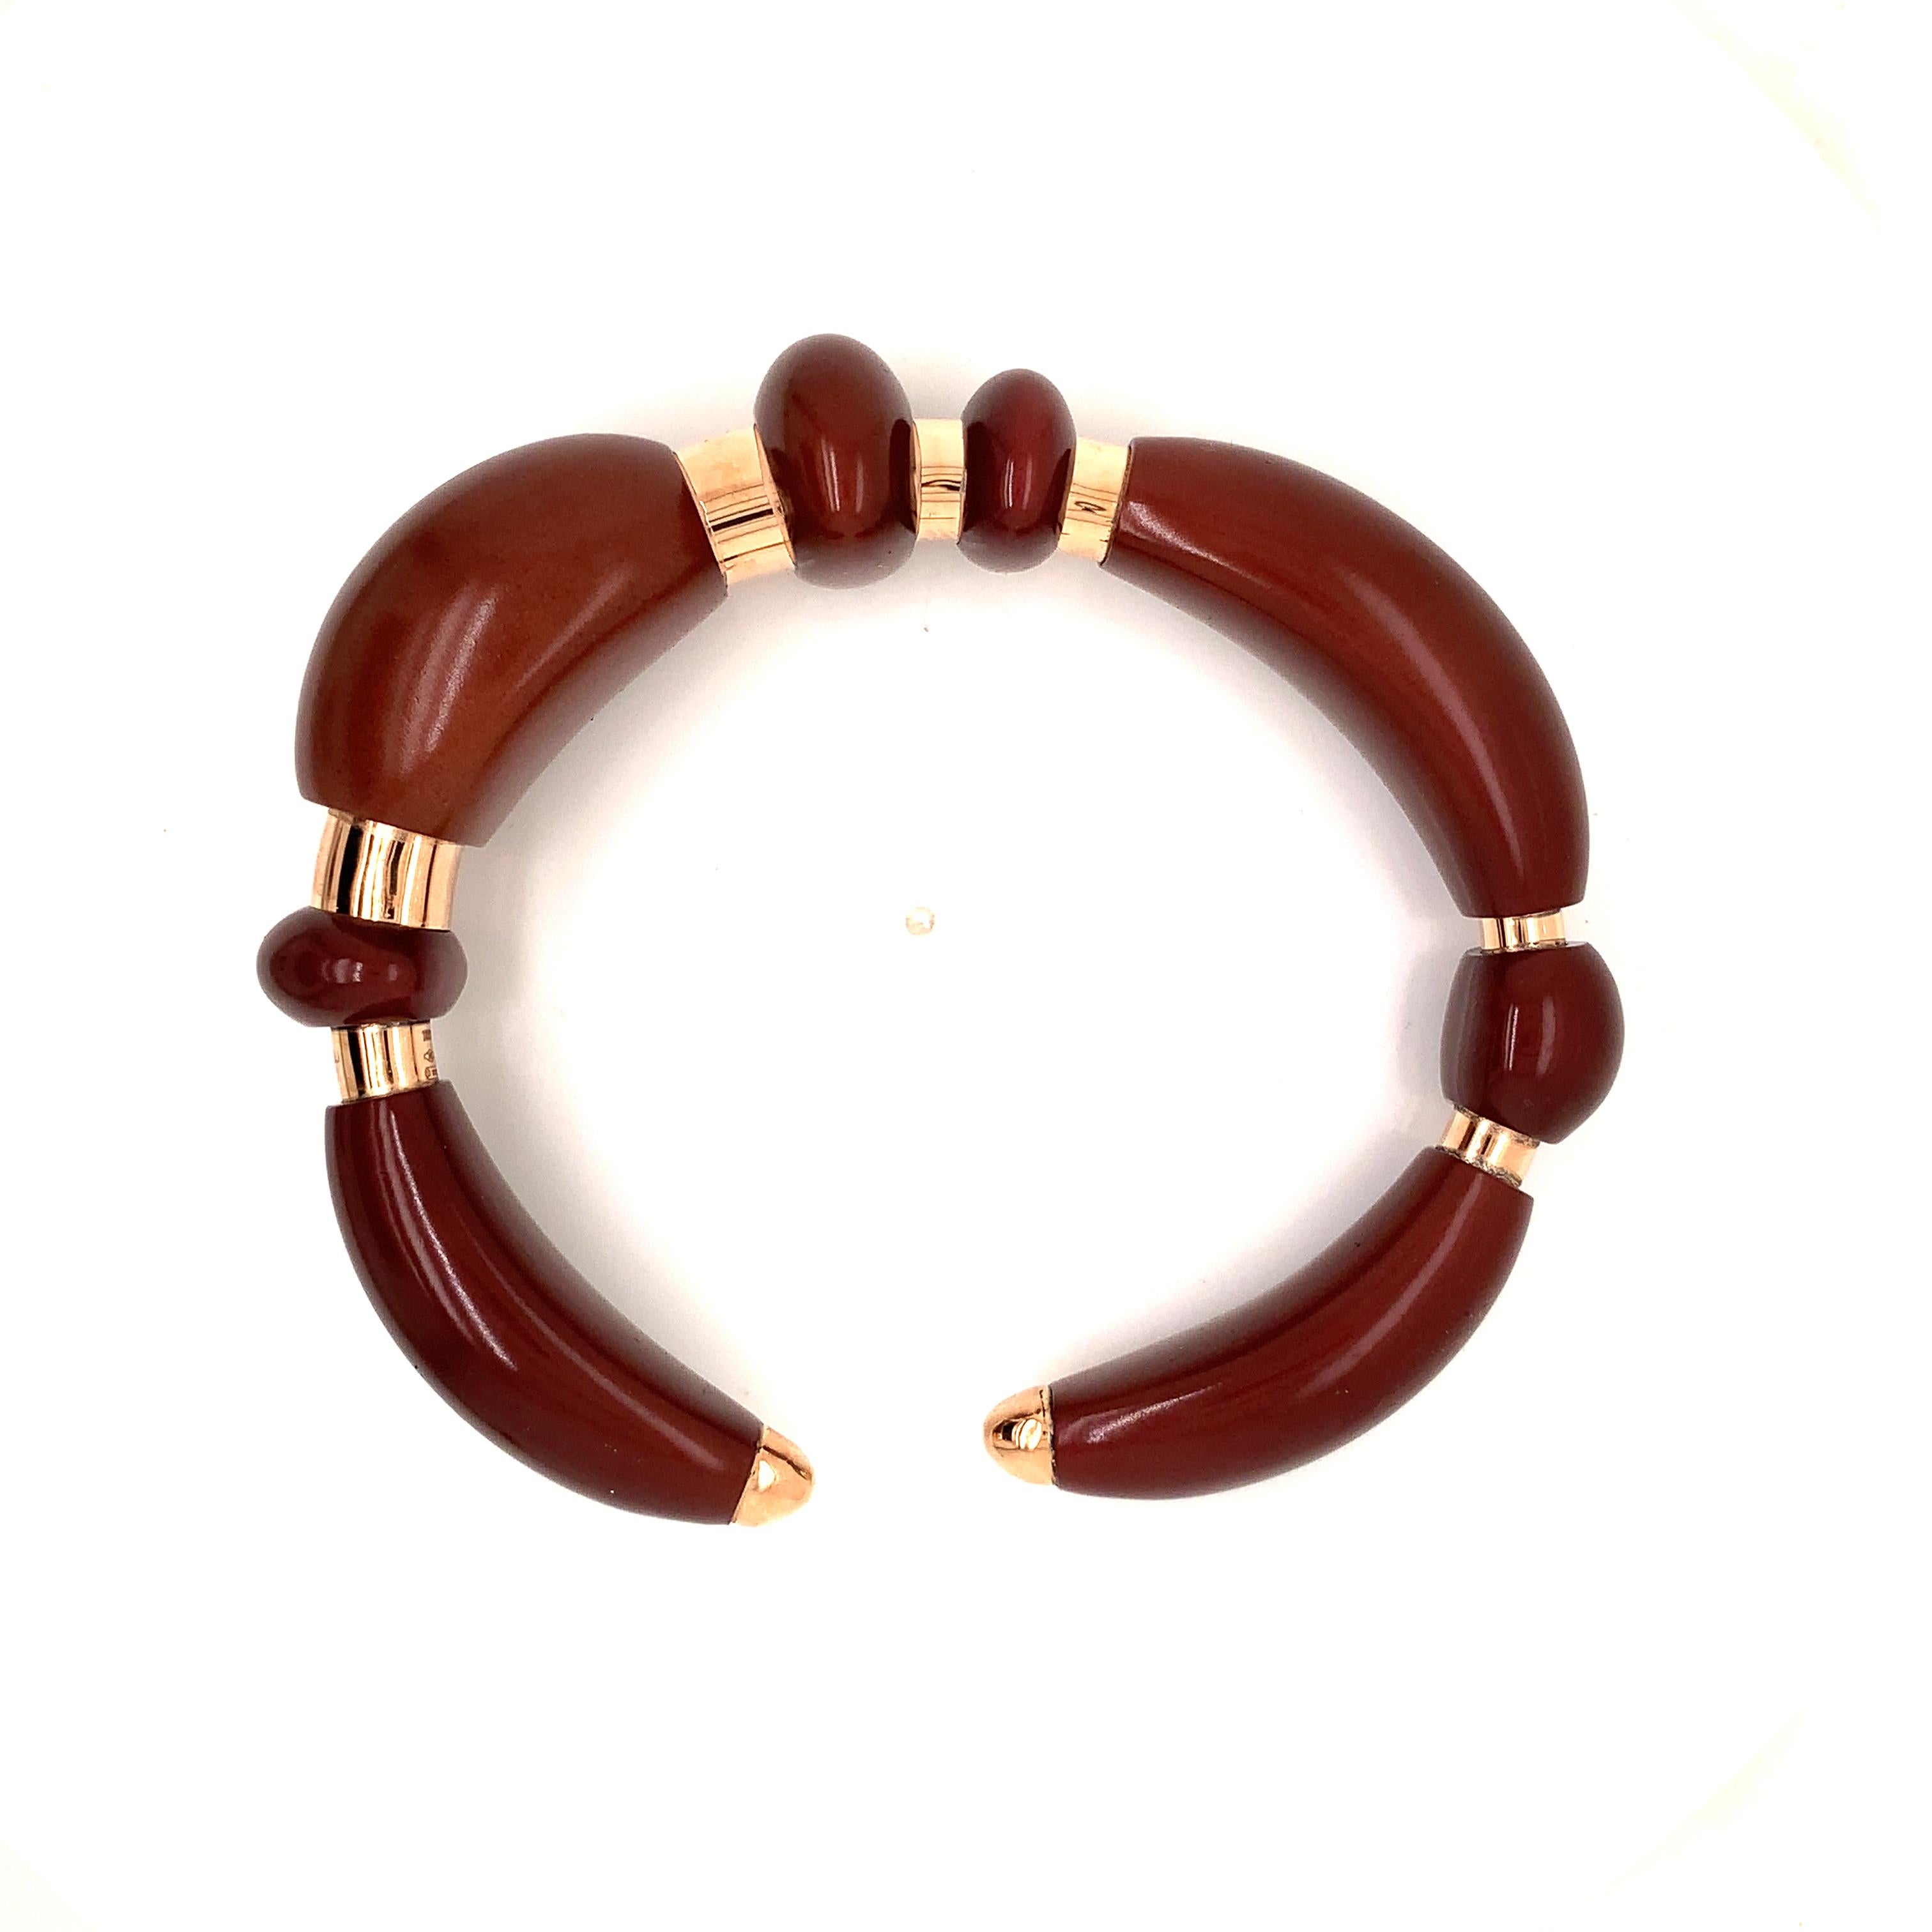 18 Karat Rose Gold and Brown Bronze Modern  Bracelet 
New Dolce Vita Collection by Garavelli
Cuff bracelet - Size 7